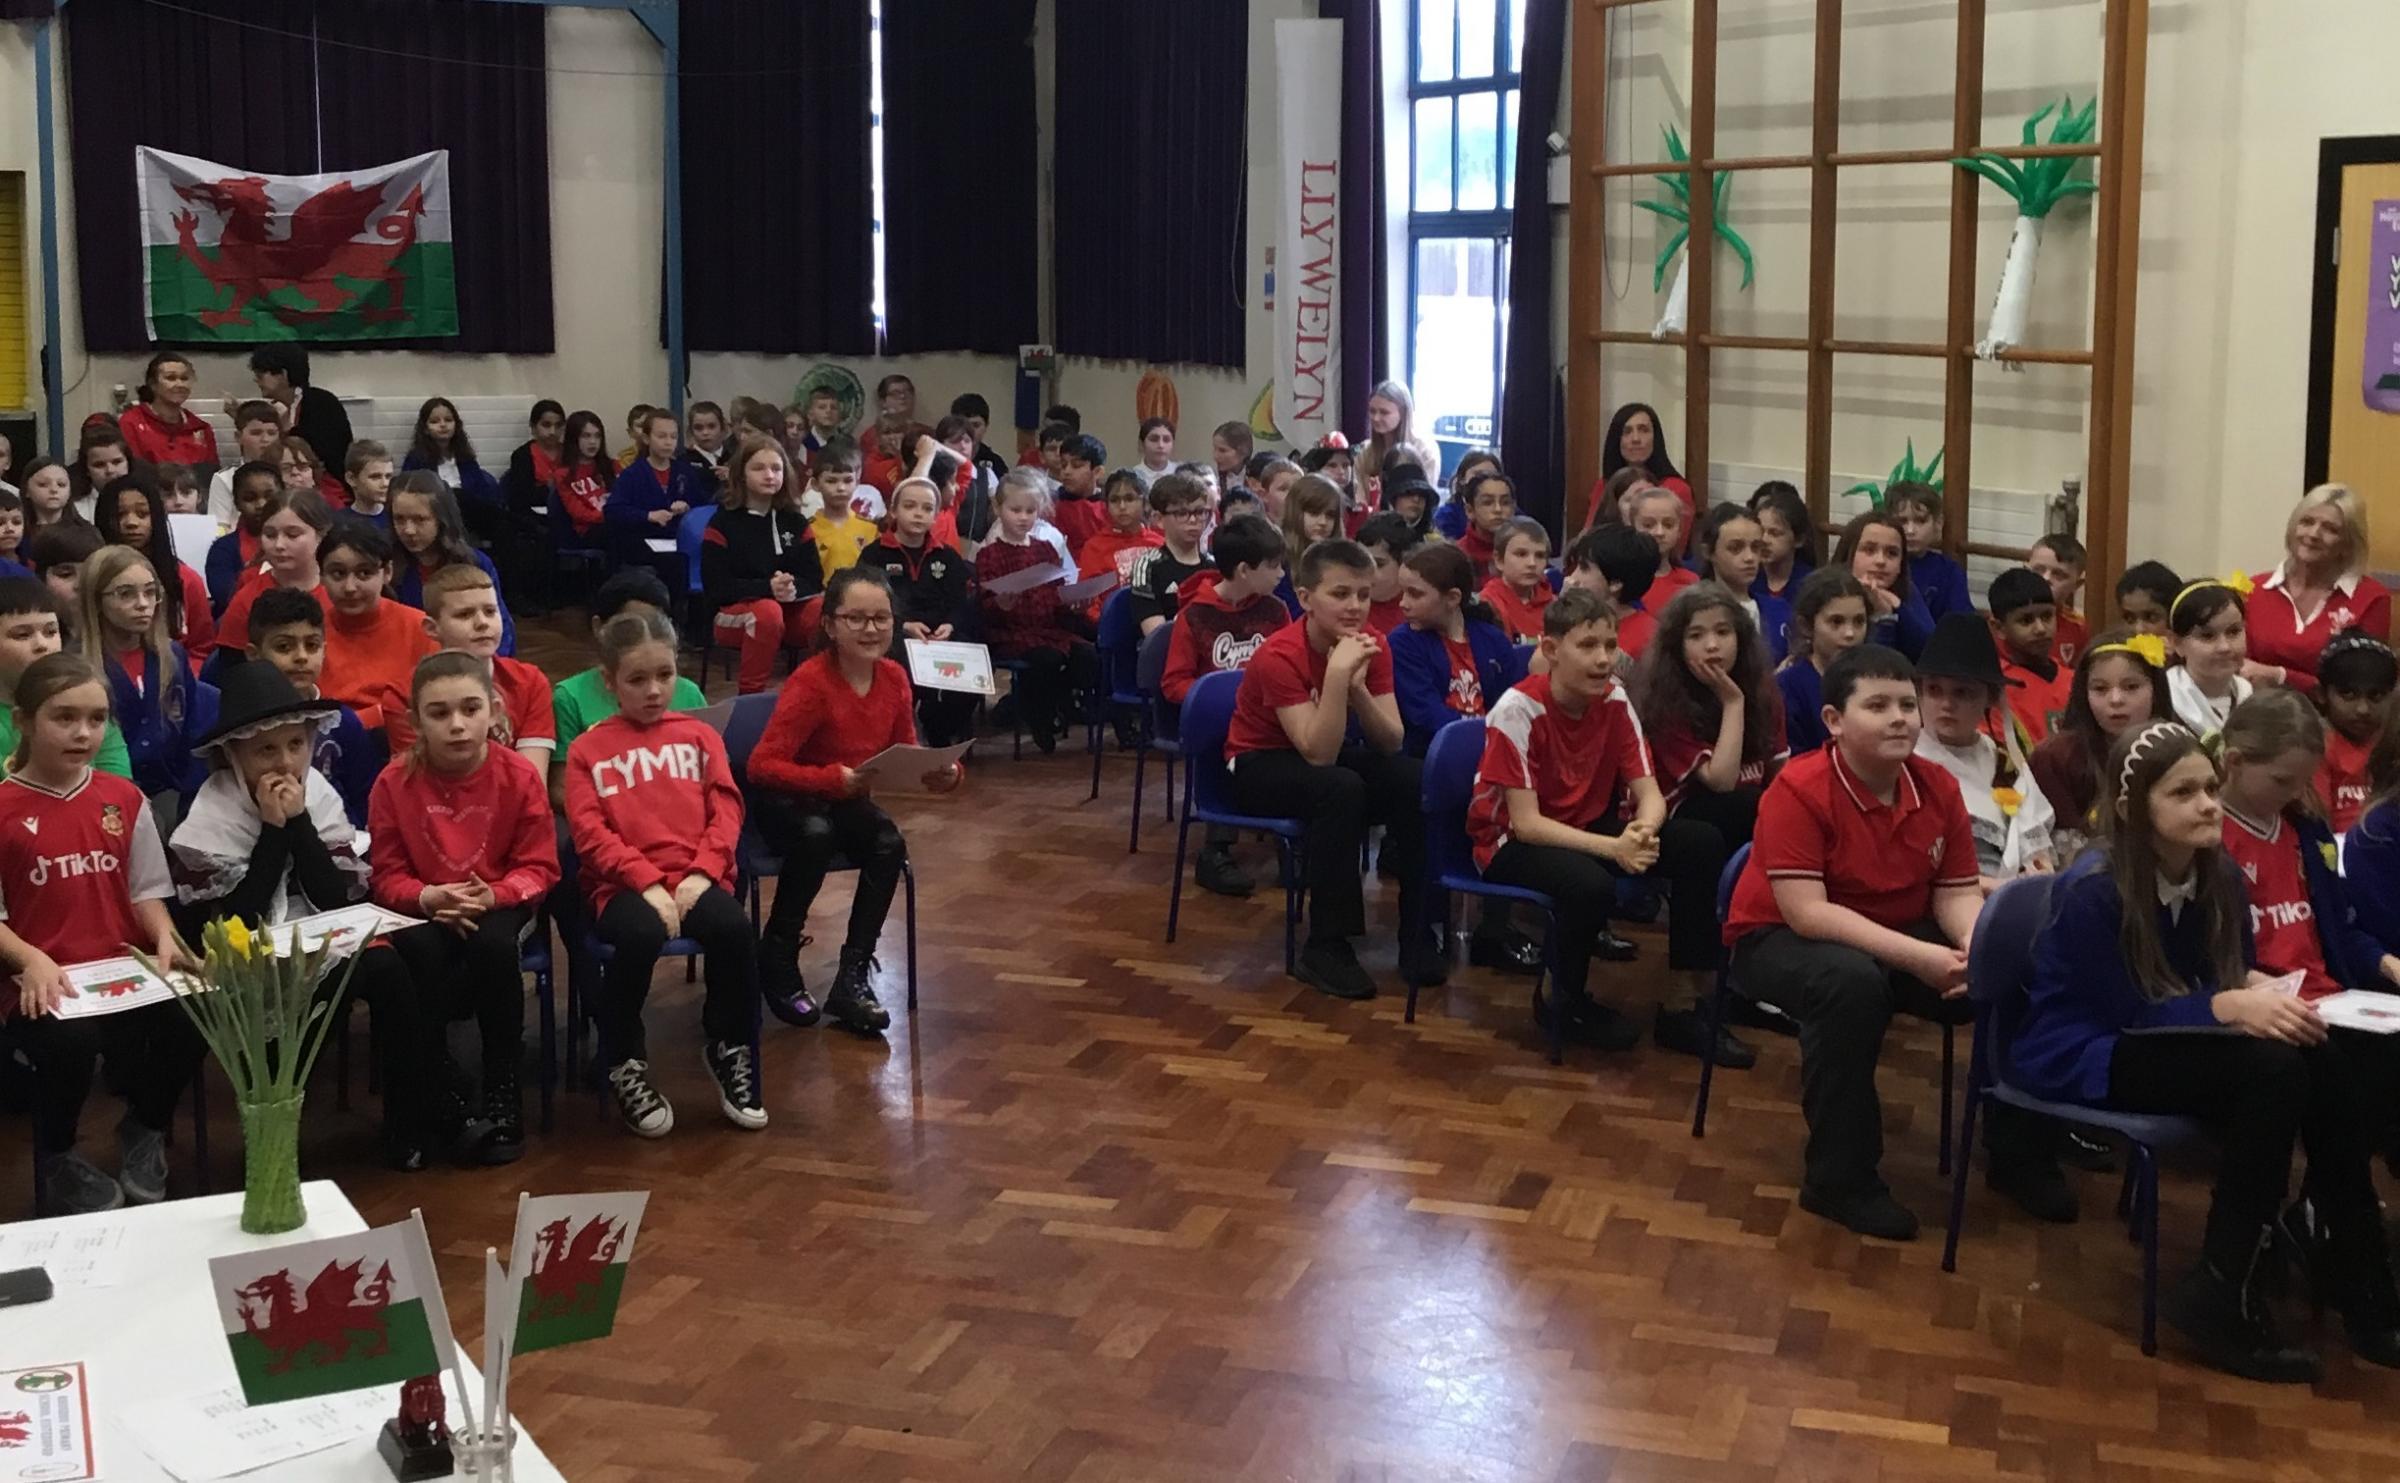 St Davids Day eisteddfod at Rhosddu Primary School.